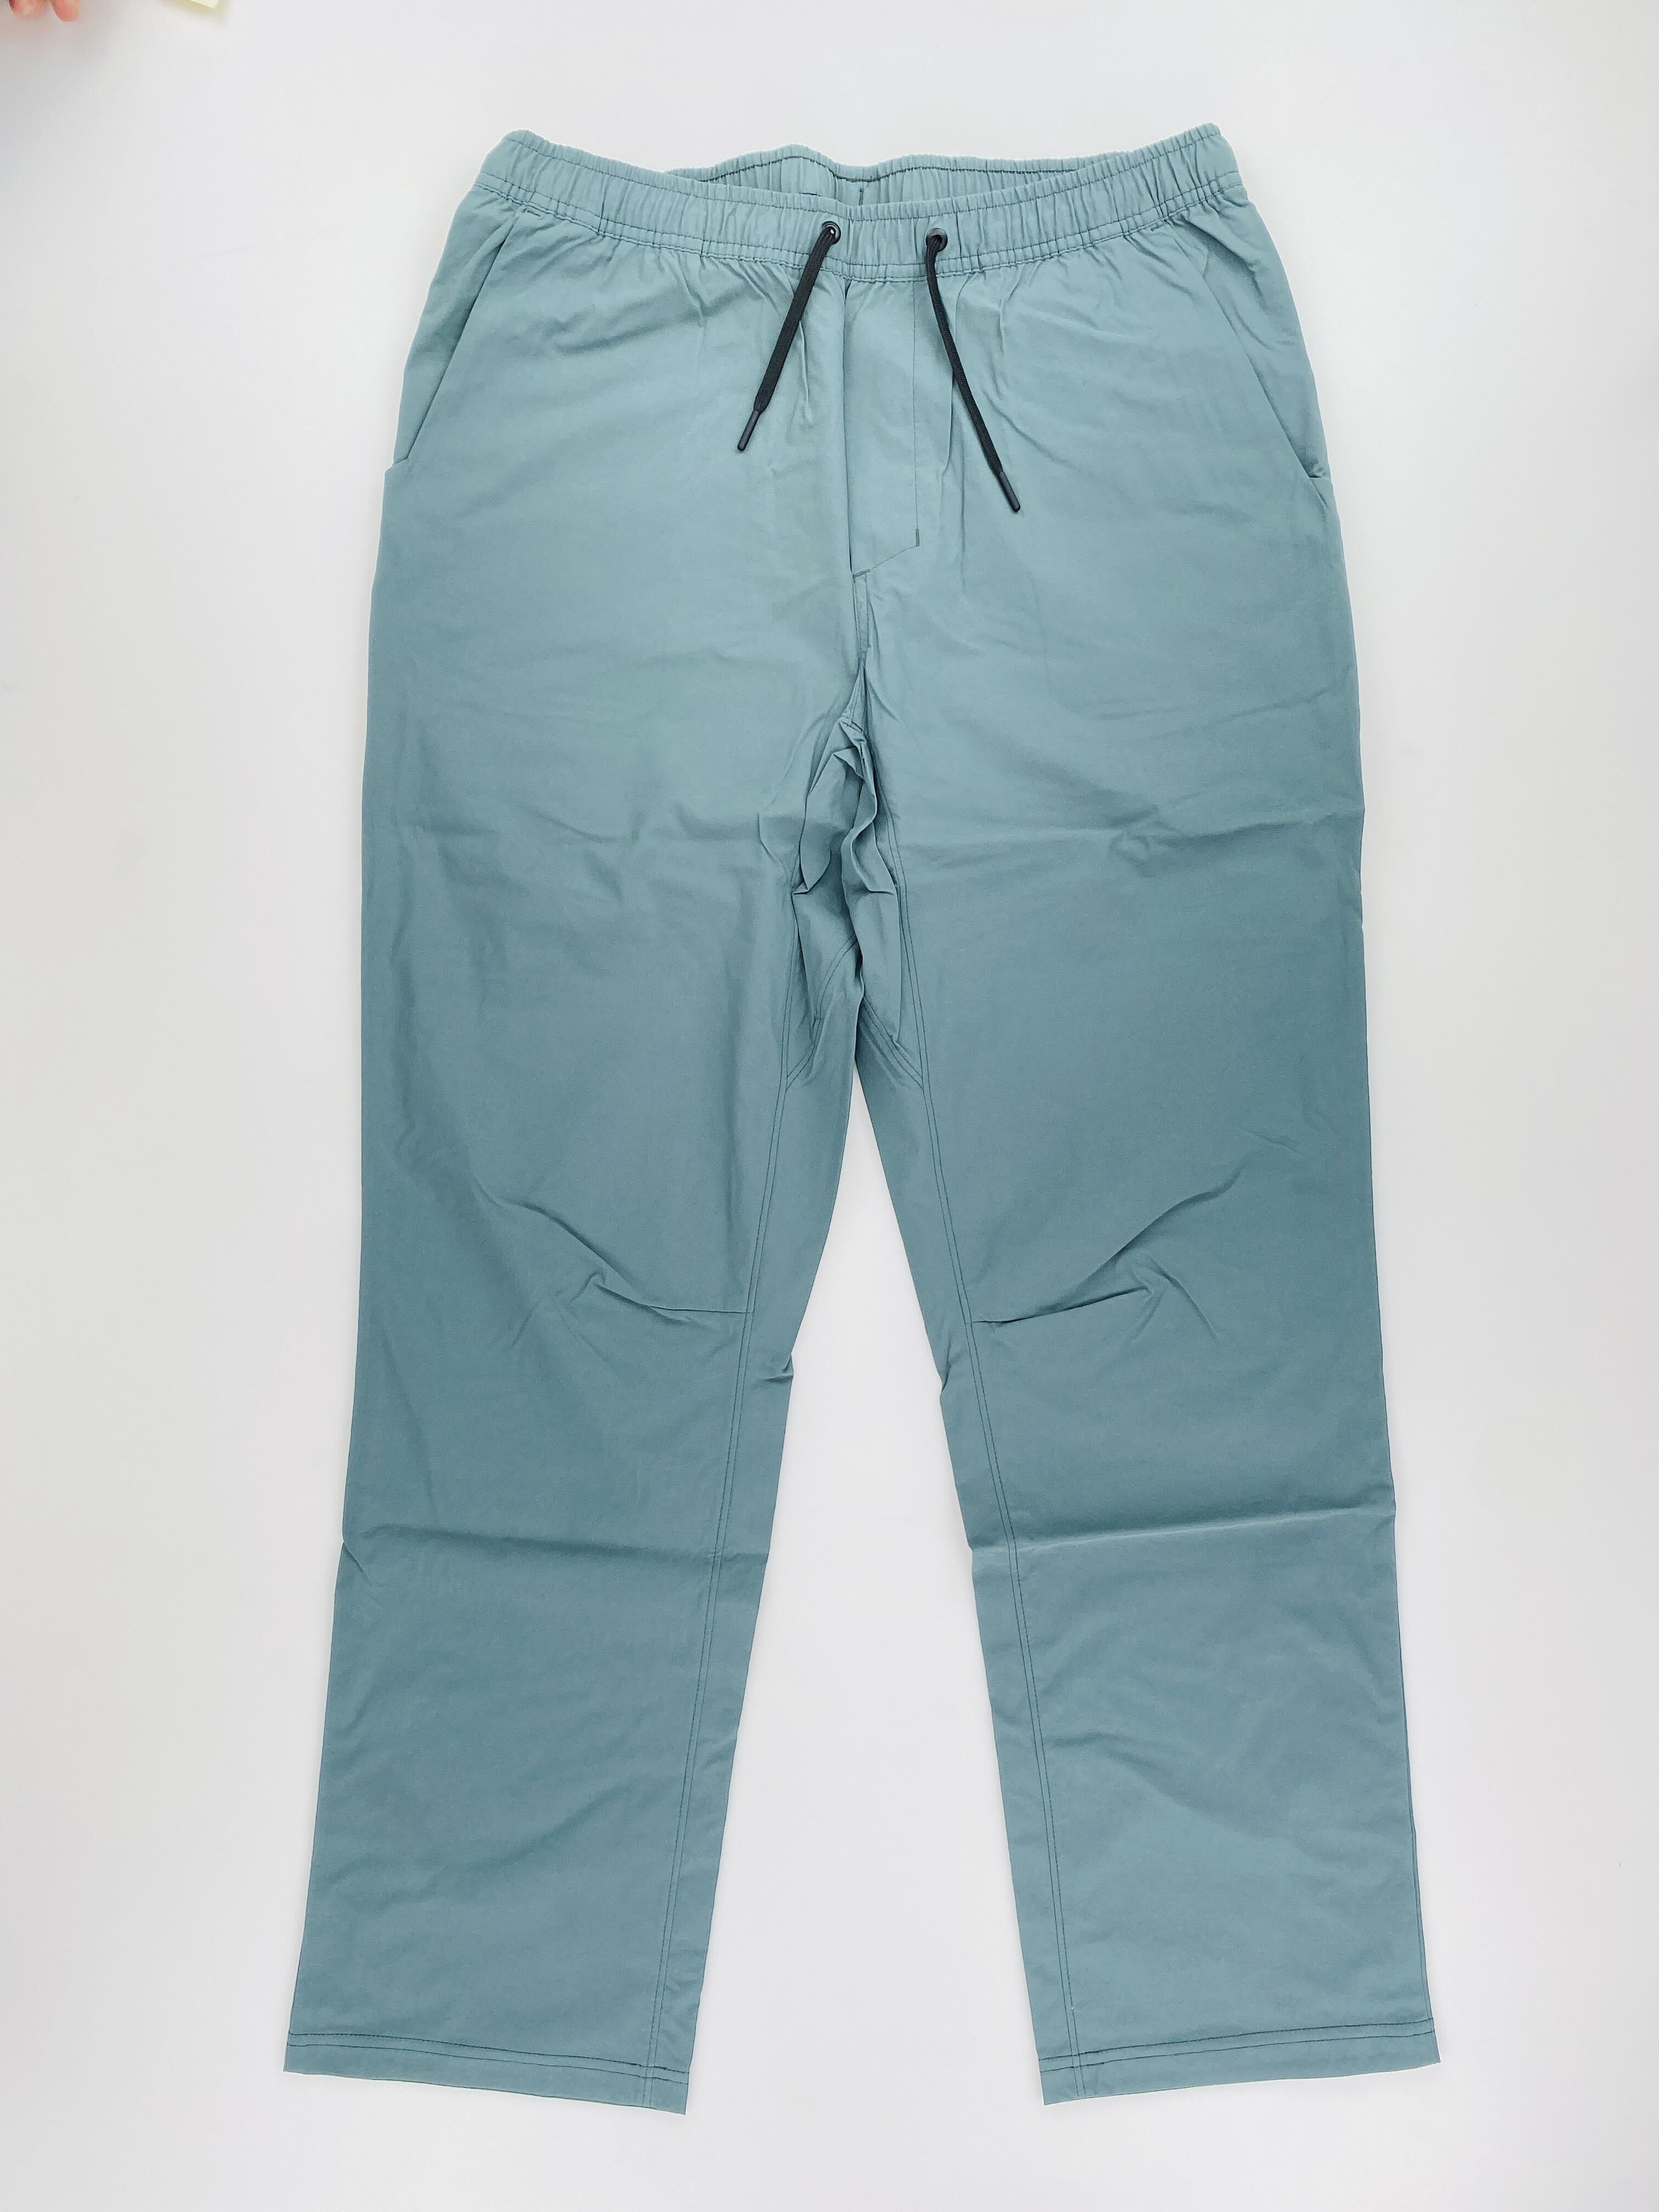 Mountain Hardwear Basin™ Pull-On Man Pant Regular - Seconde main Pantalon randonnée homme - Vert - L | Hardloop